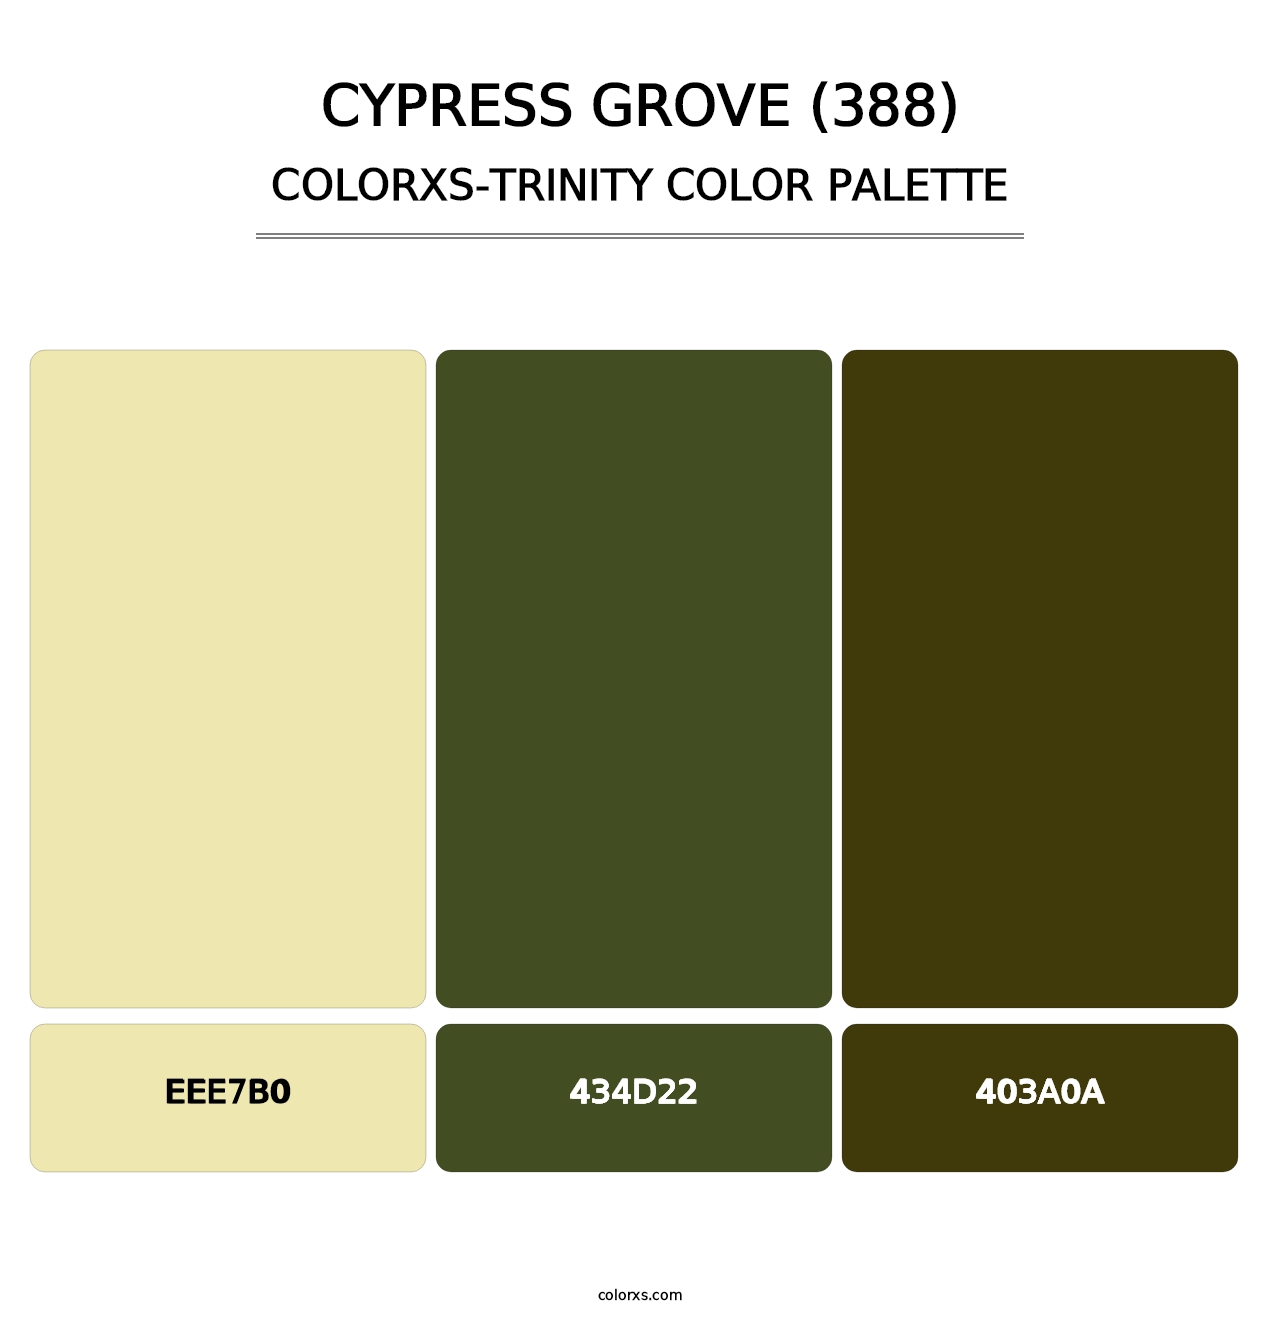 Cypress Grove (388) - Colorxs Trinity Palette